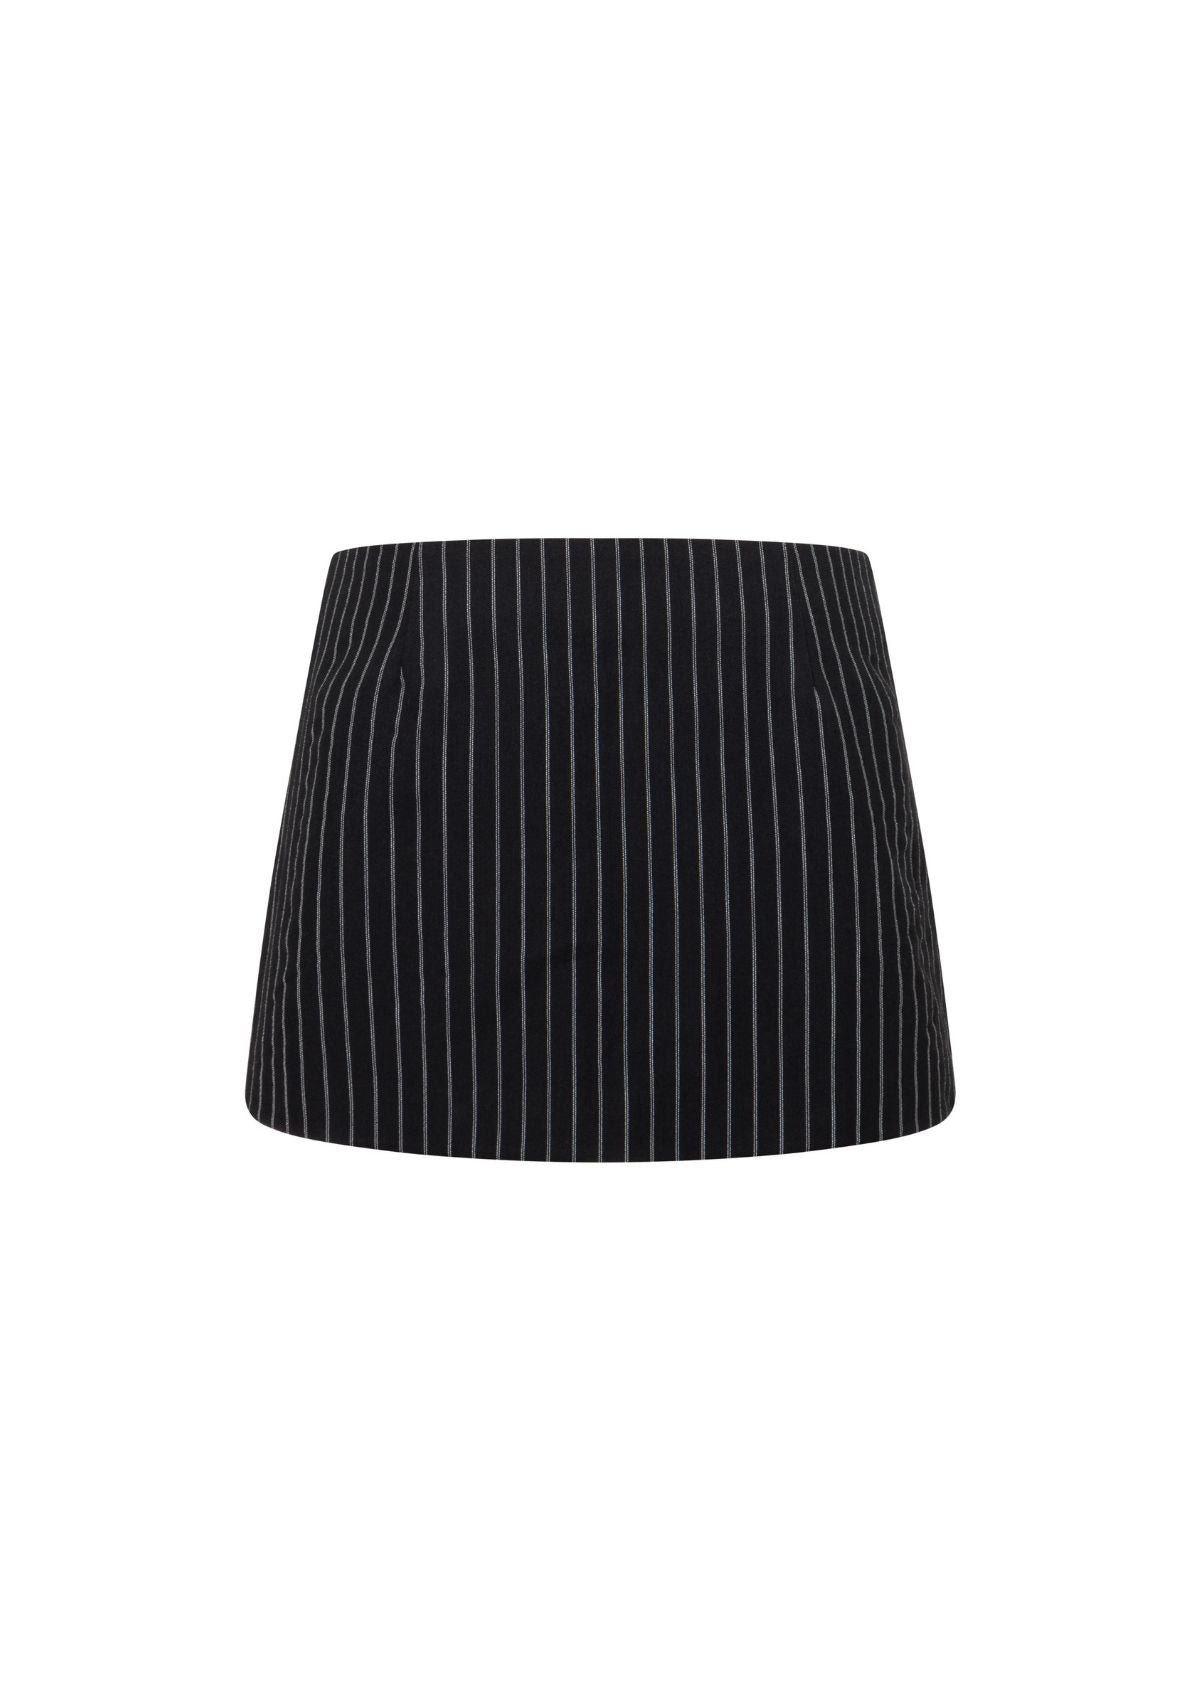 Bella Micro Skirt - Black Pinstripe